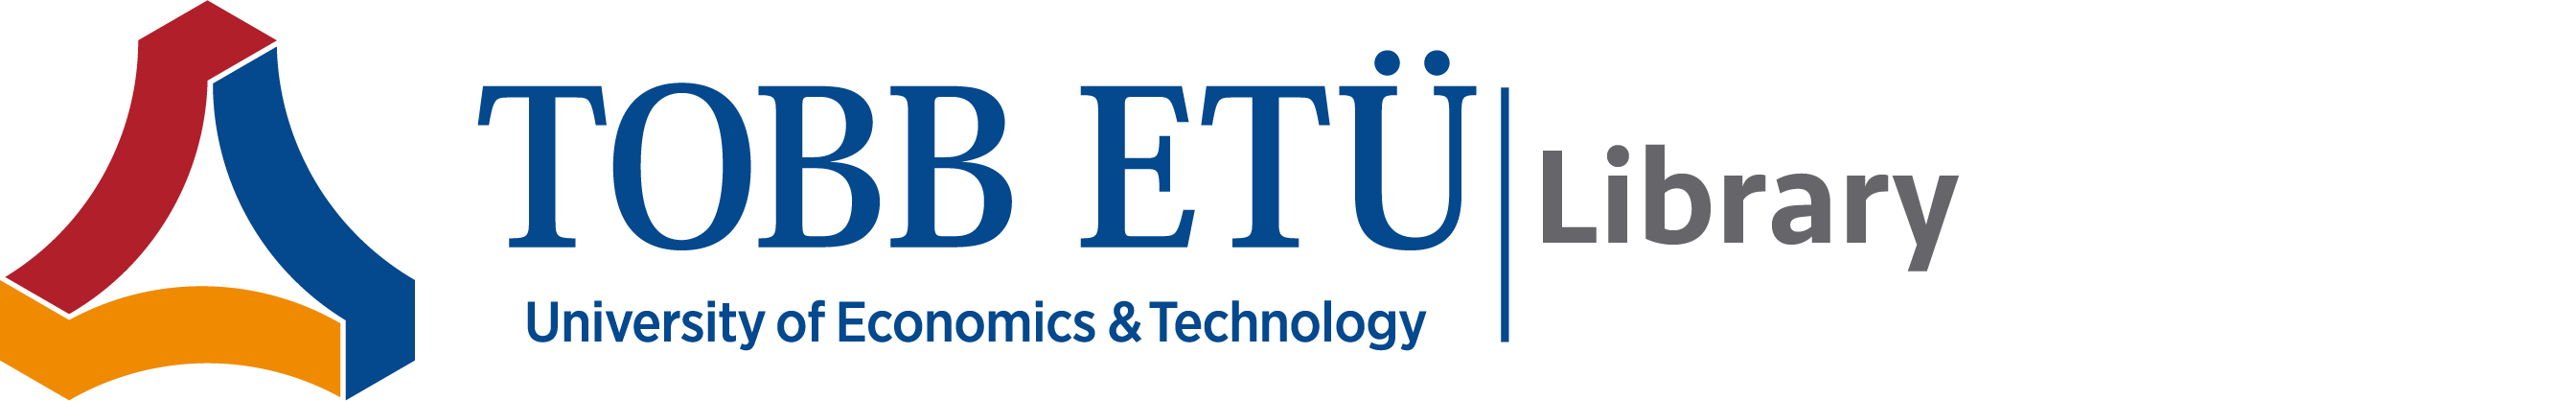 TOBB ETU - University of Economics and Technology